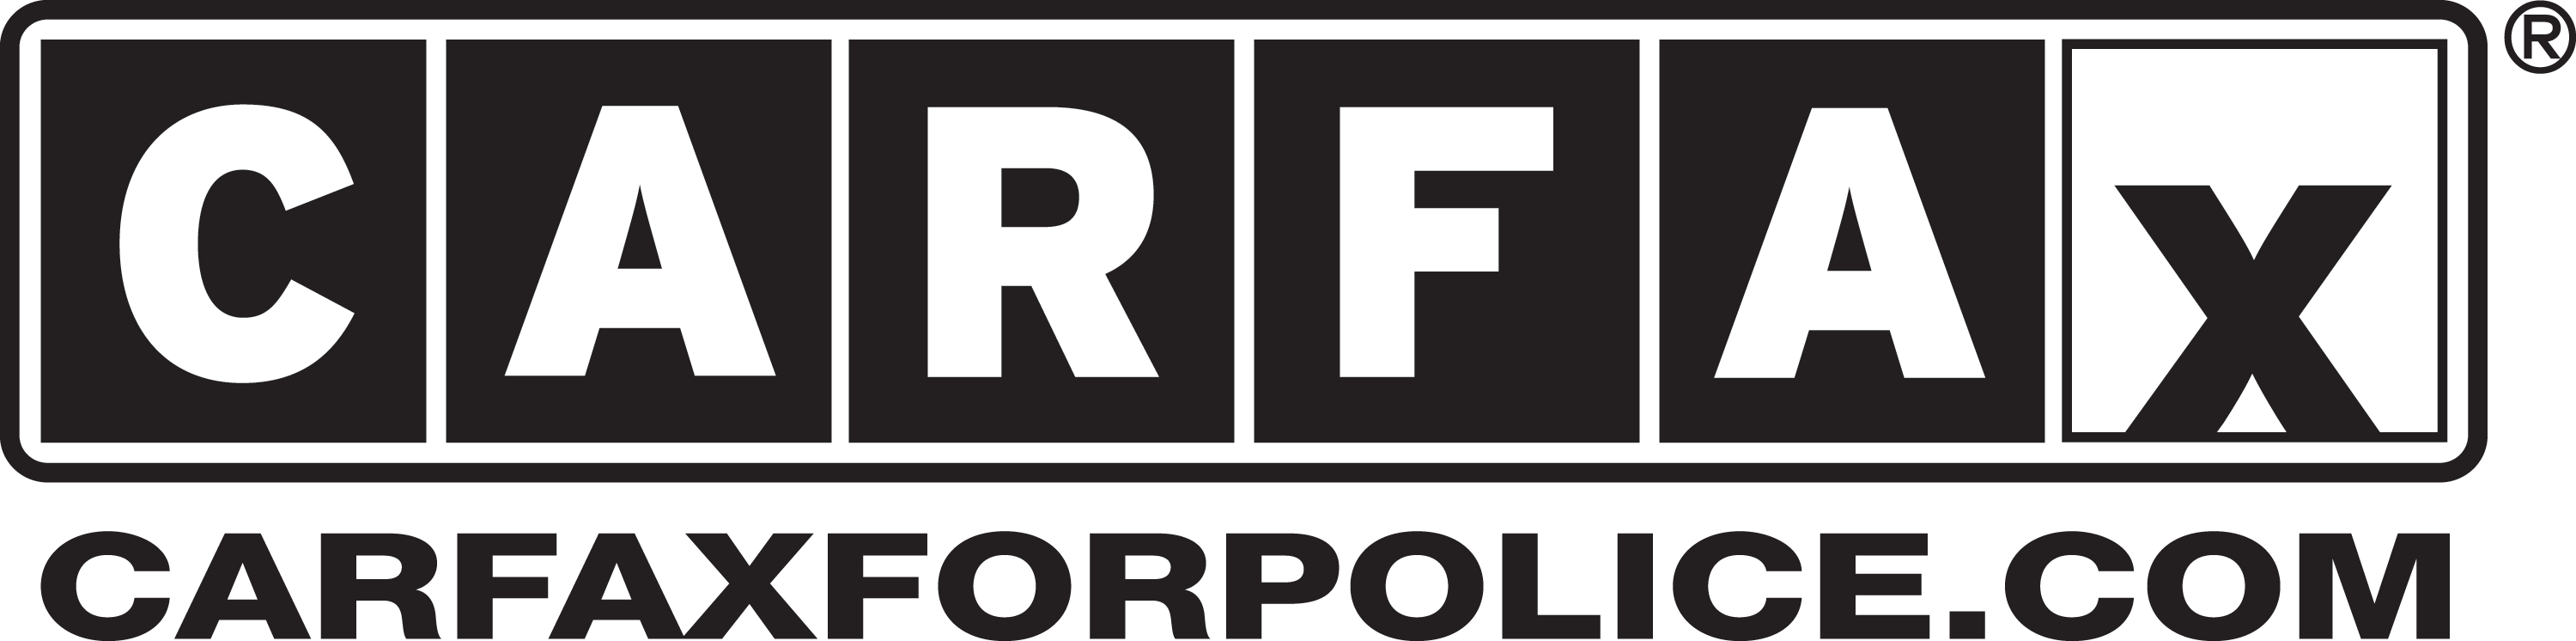 carfaxforpolice_logo (2).png